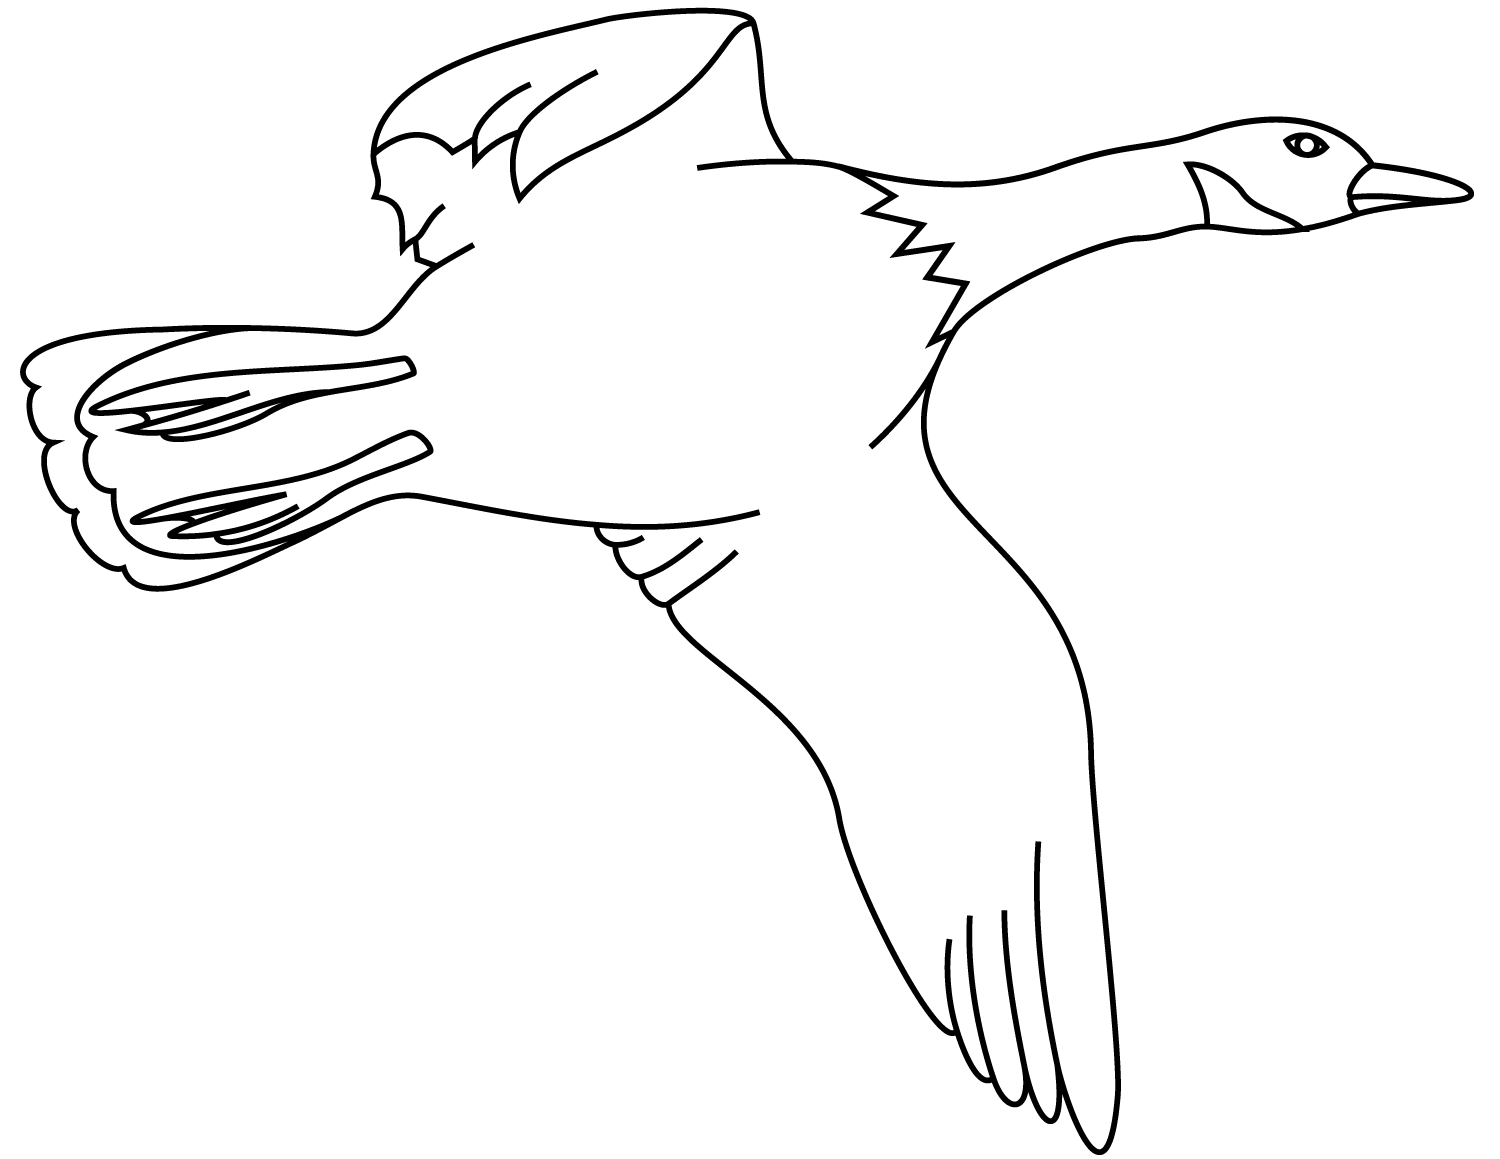 O pato-real voador precisa de asas grandes para decolagens rápidas dos patos